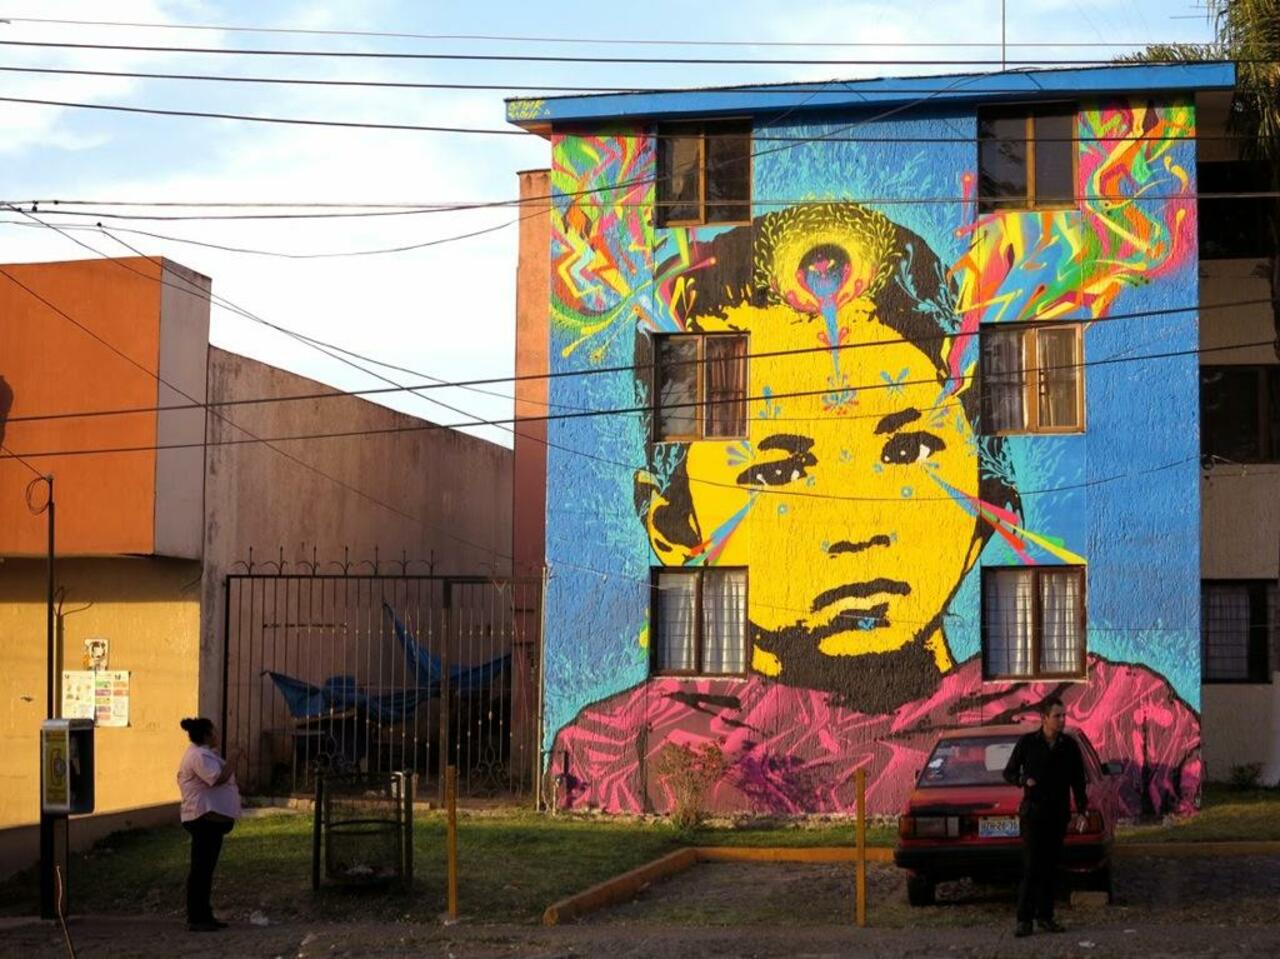 “@Pitchuskita: Stinkfish 
Tonala, Mexico 

#streetart #art #graffiti #urbanart http://t.co/mduDHcqd7z”